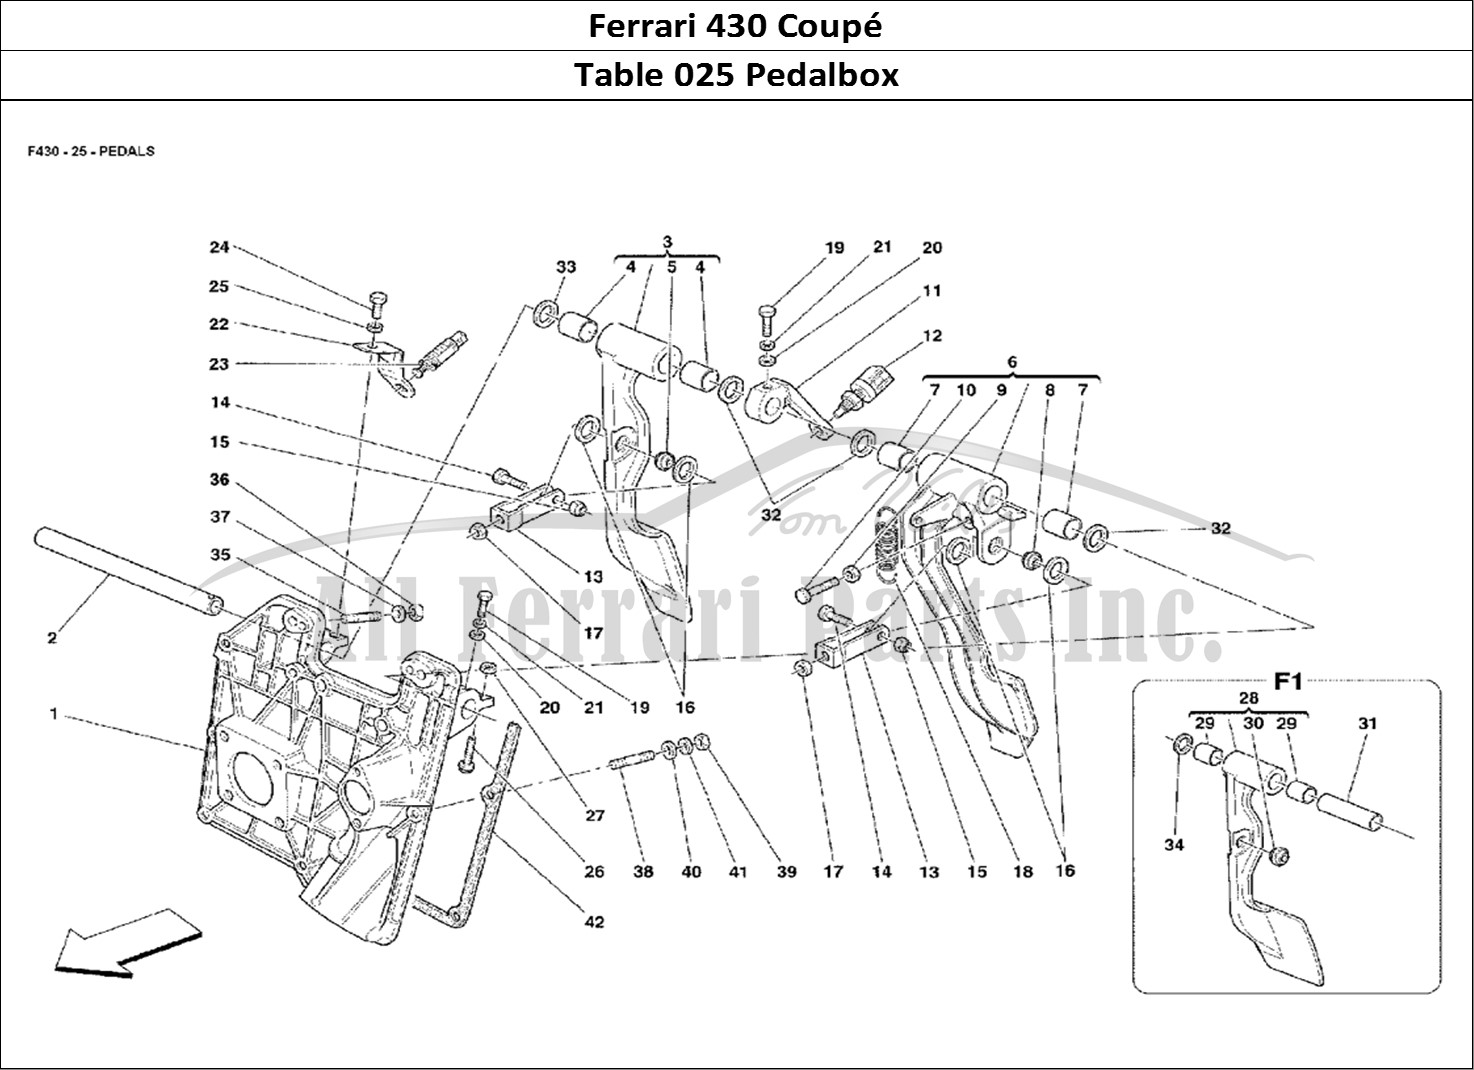 Ferrari Parts Ferrari 430 Coup Page 025 Pedals